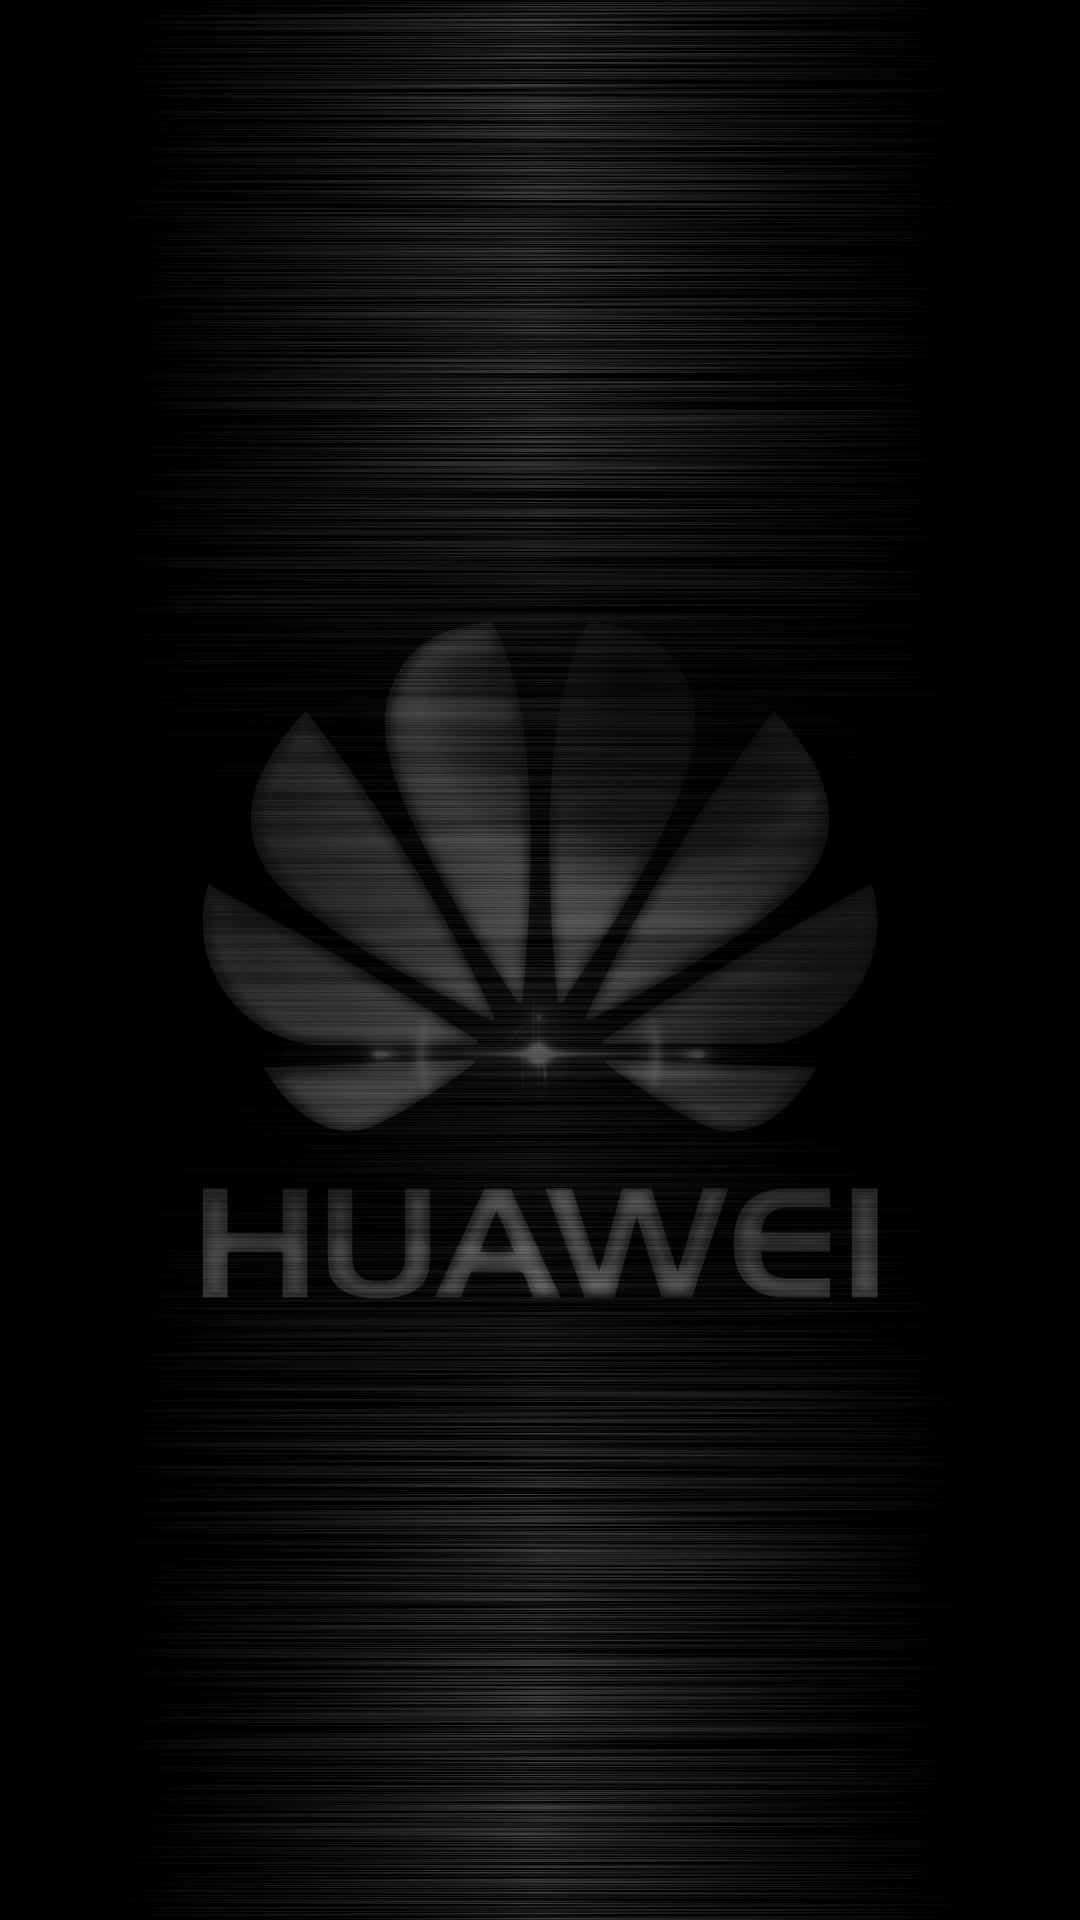 The Huawei Logo Shines Bright